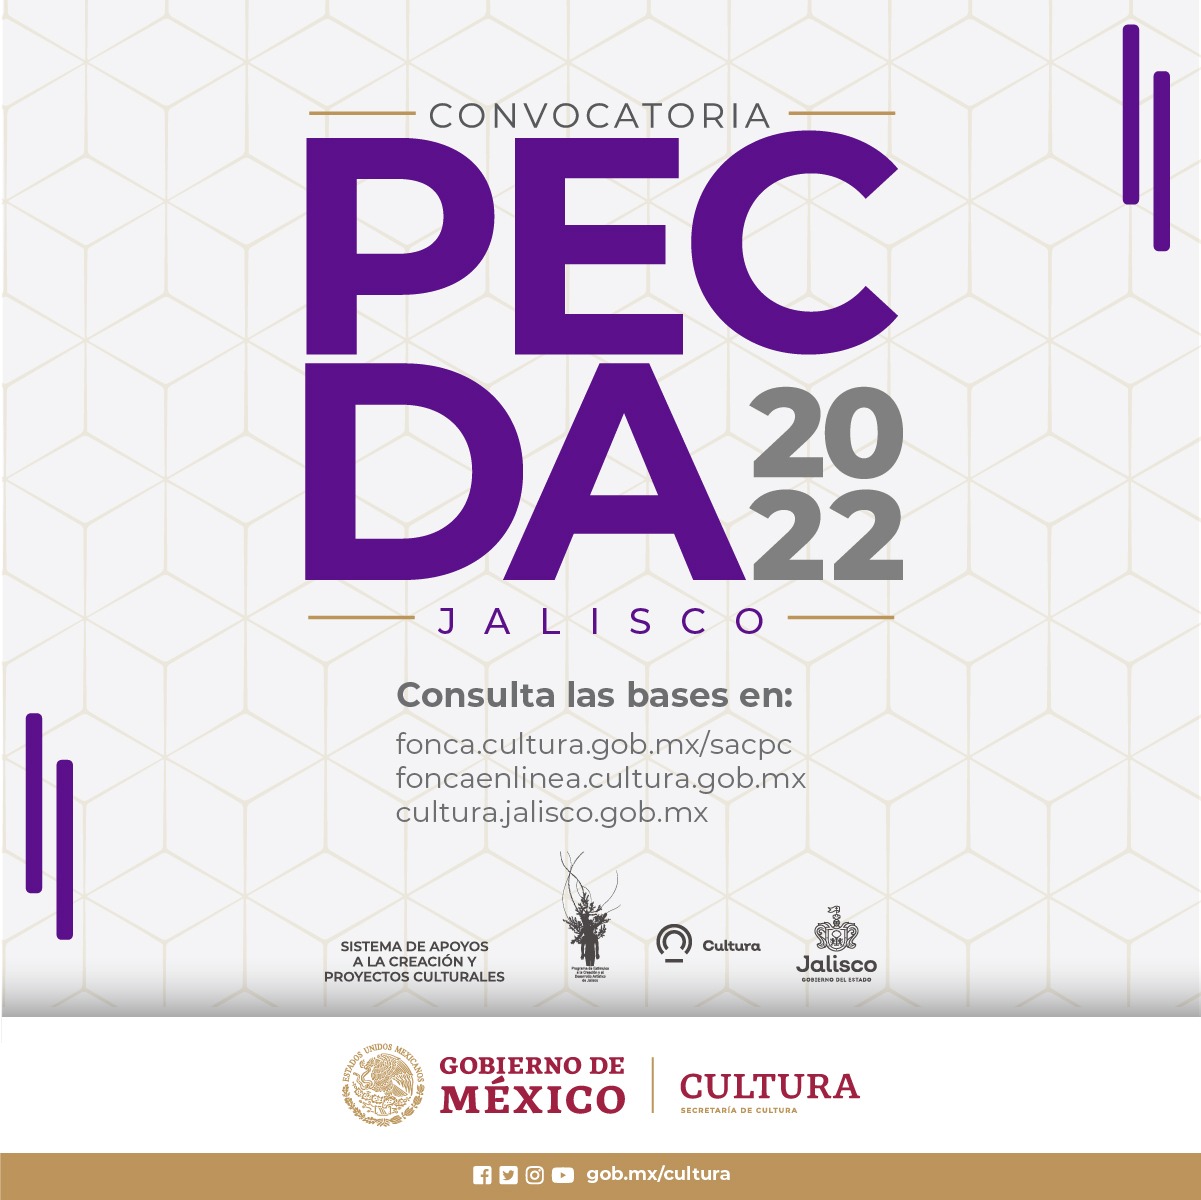 Abren la convocatoria PECDA 2022 para Jalisco